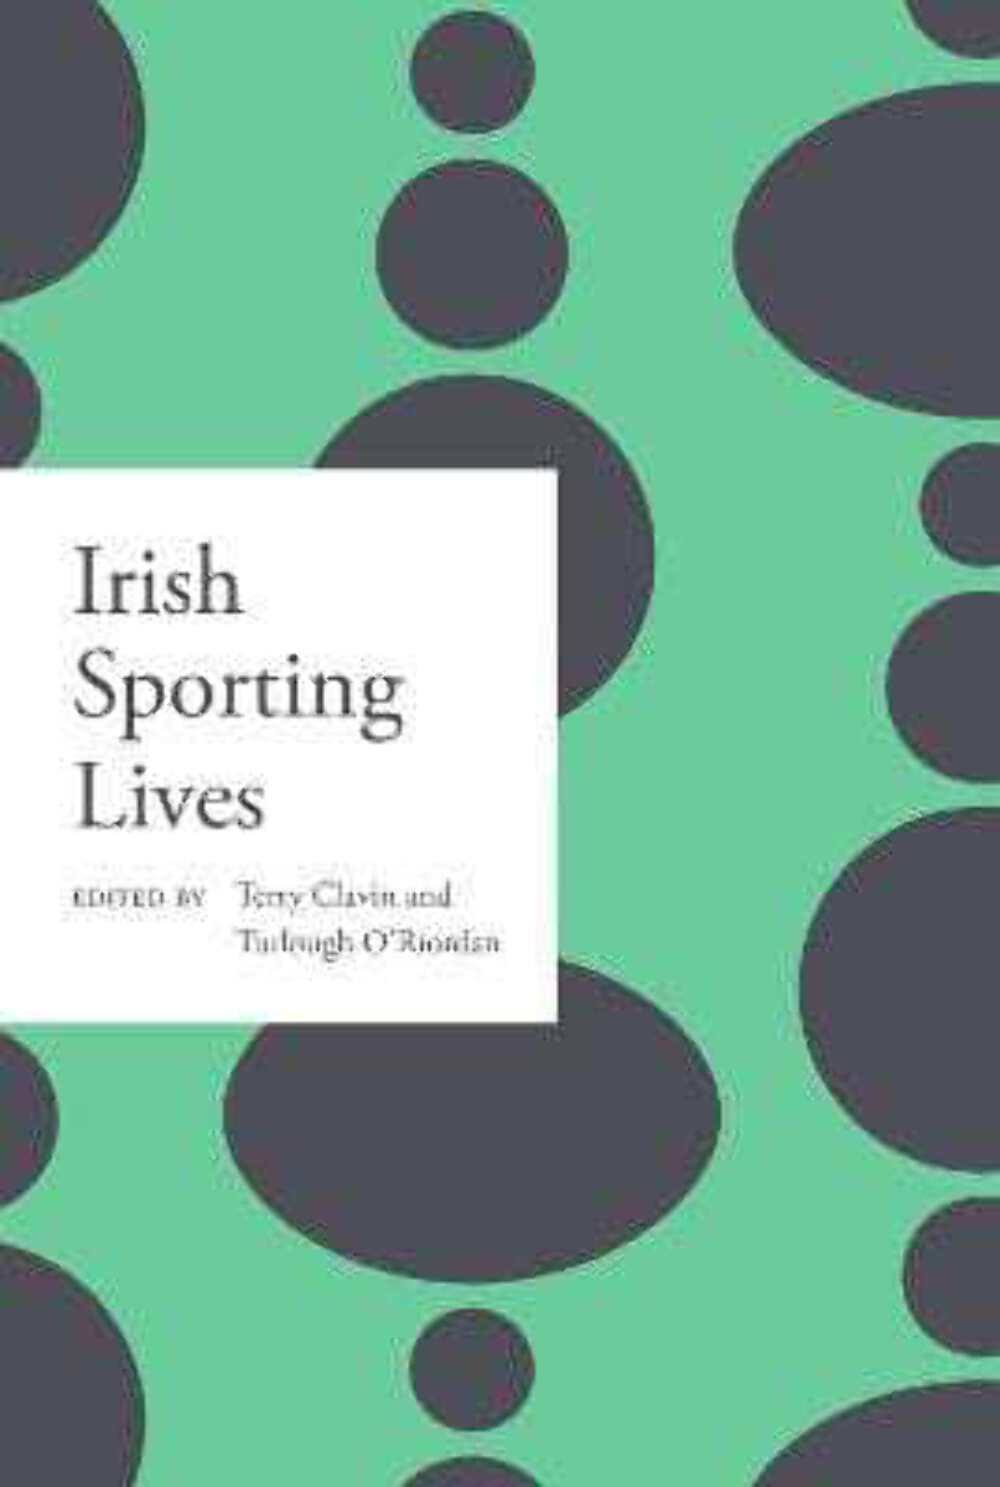 Irish Sporting Lives [Book]